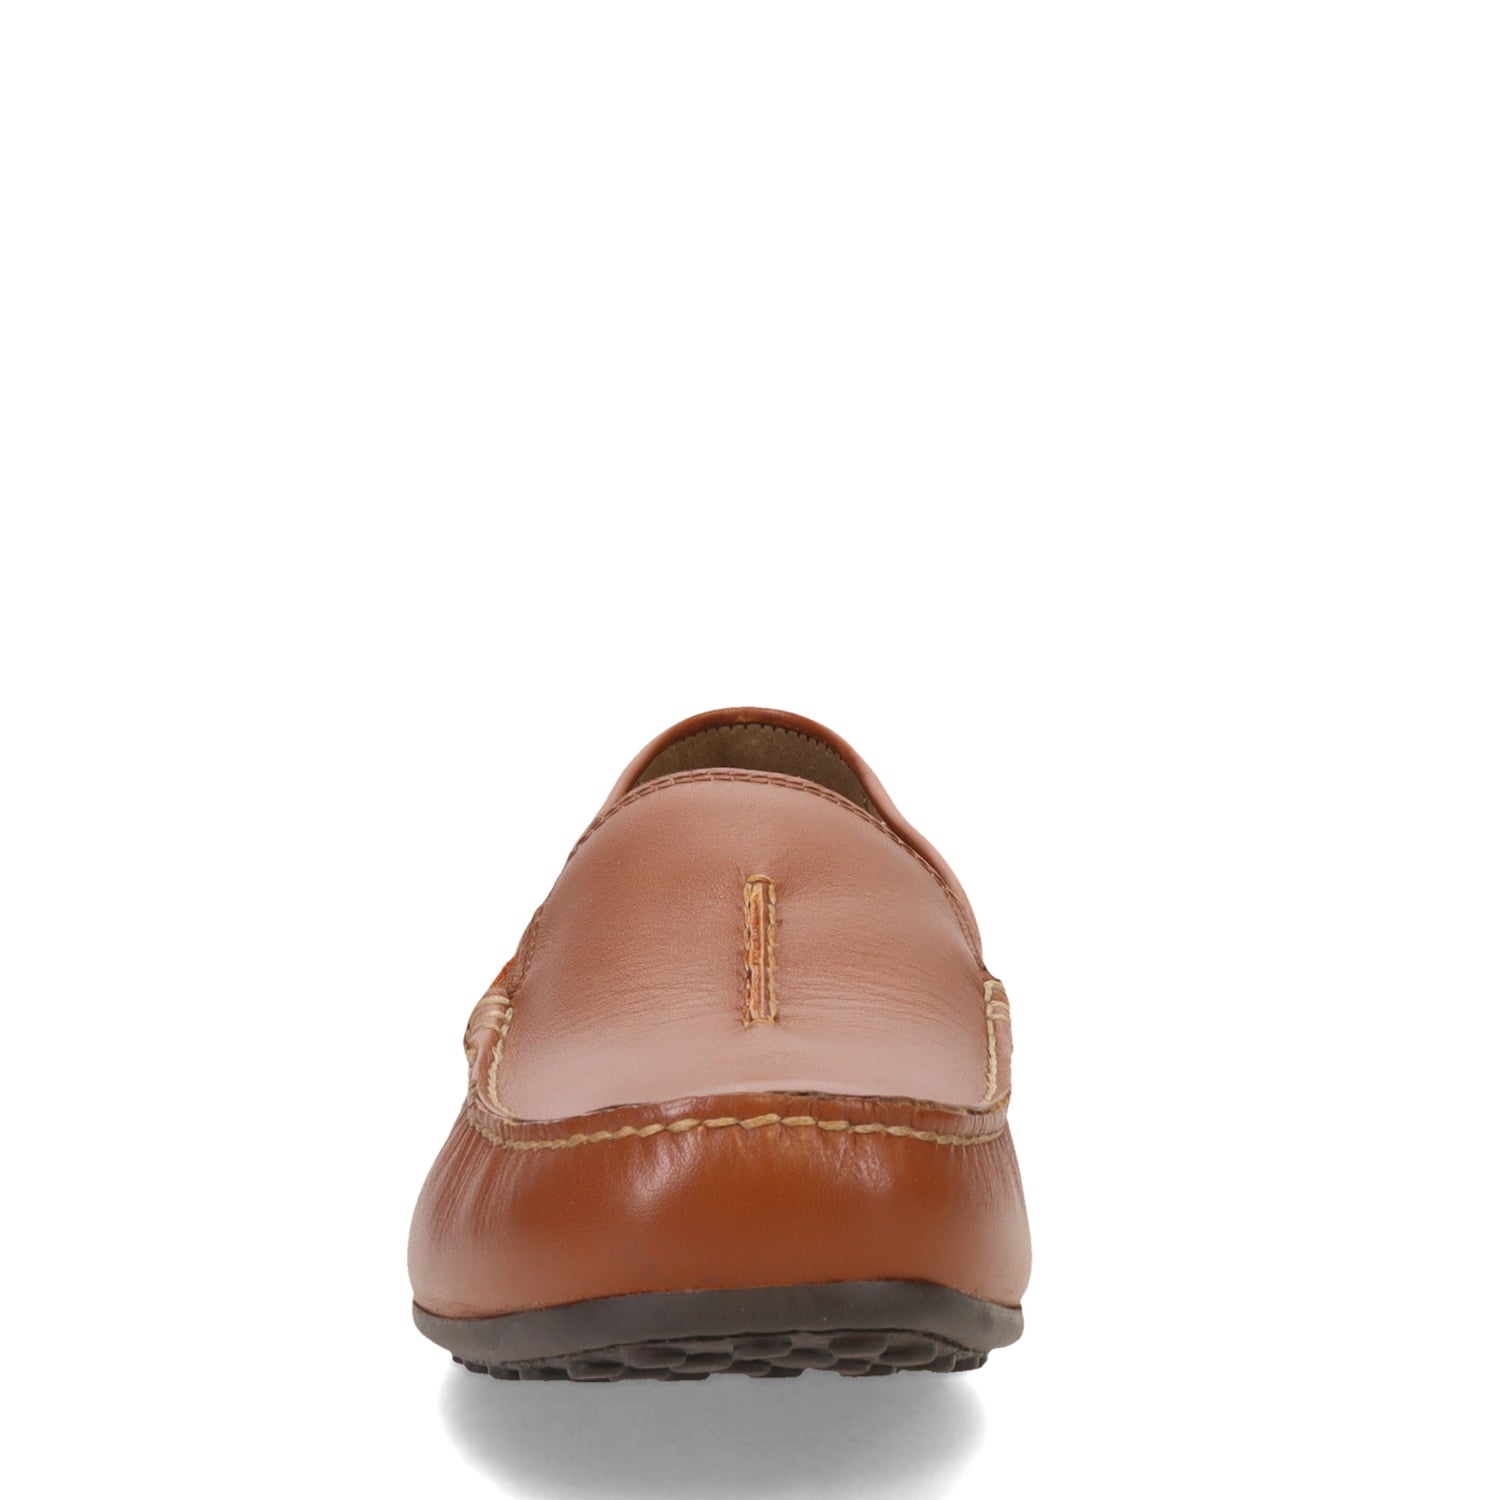 Peltz Shoes  Men's Florsheim Throttle Moc Toe Venetian Loafer Saddle Tan 11998-257